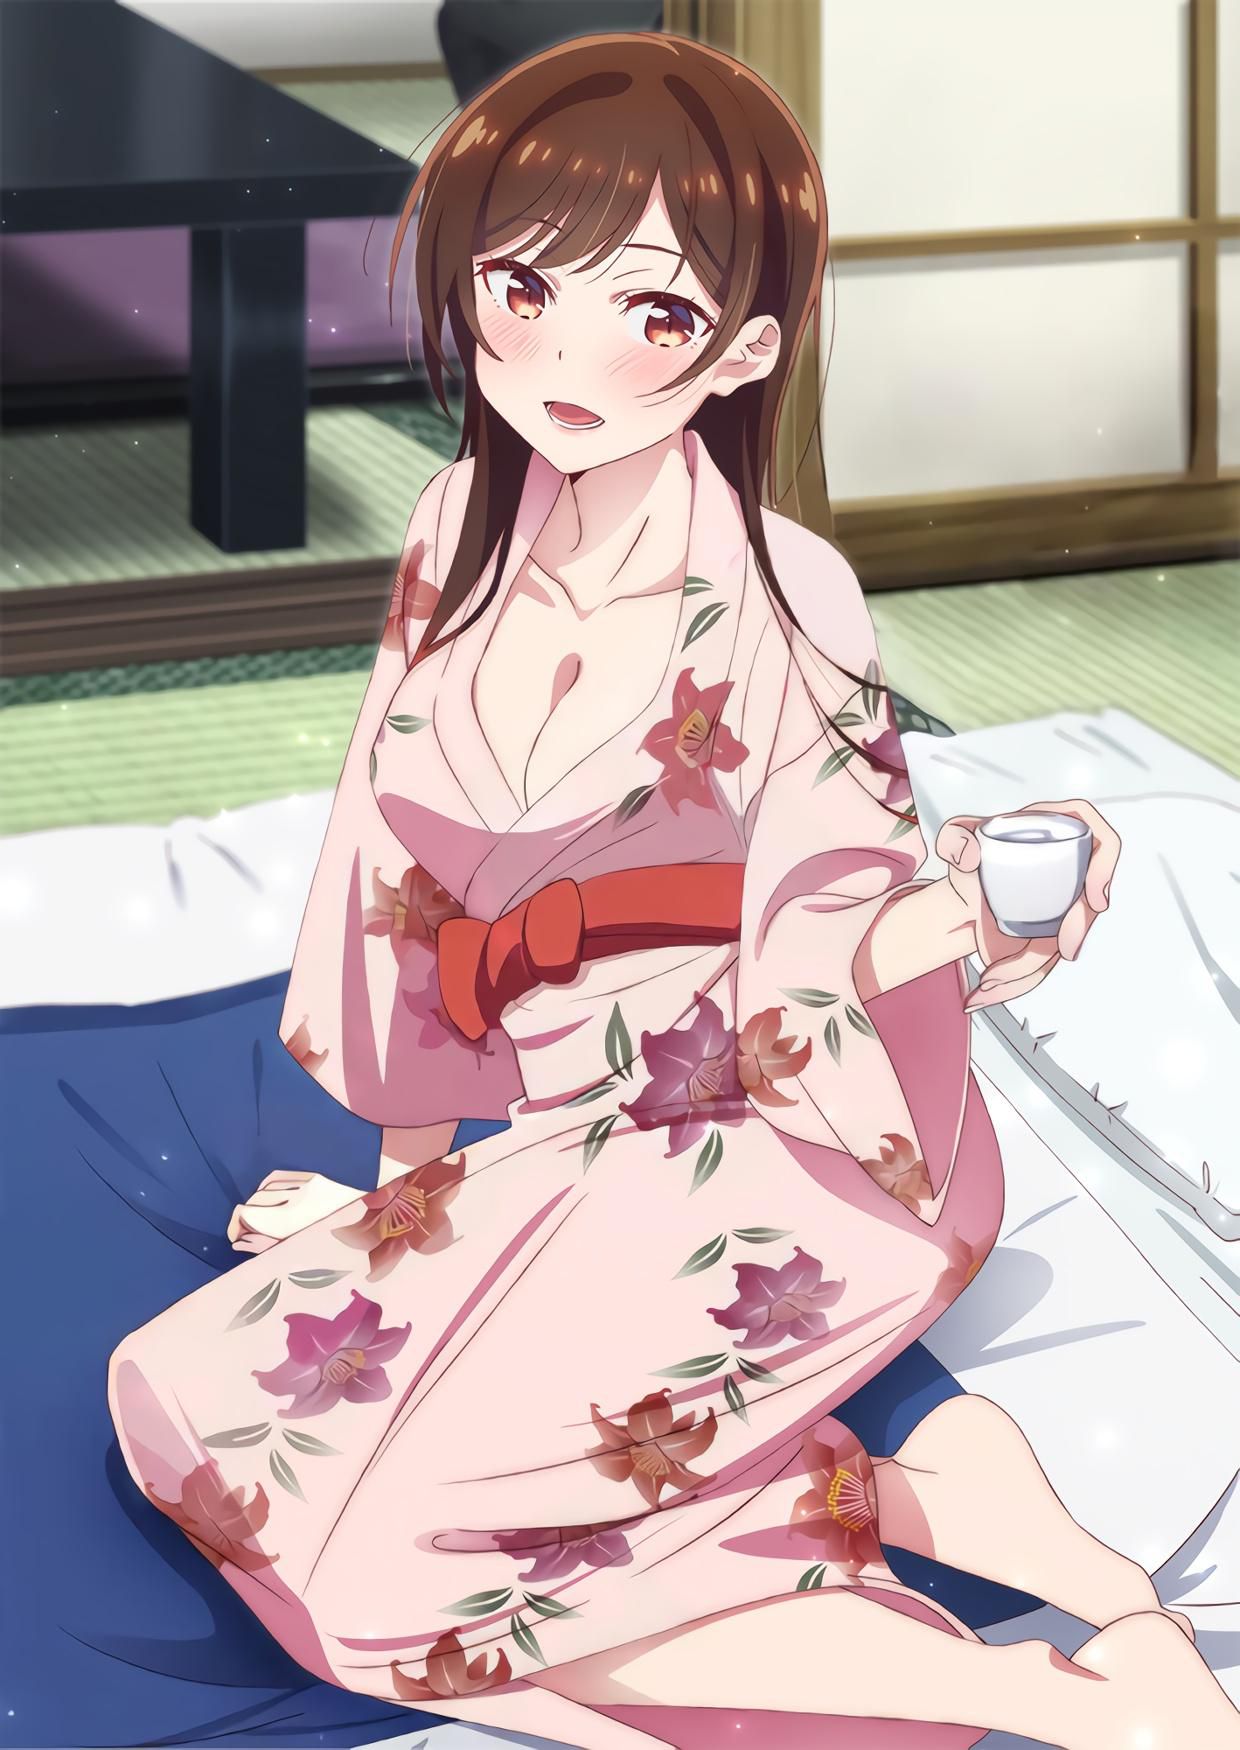 2D erotic image of kimono / yukata. 20